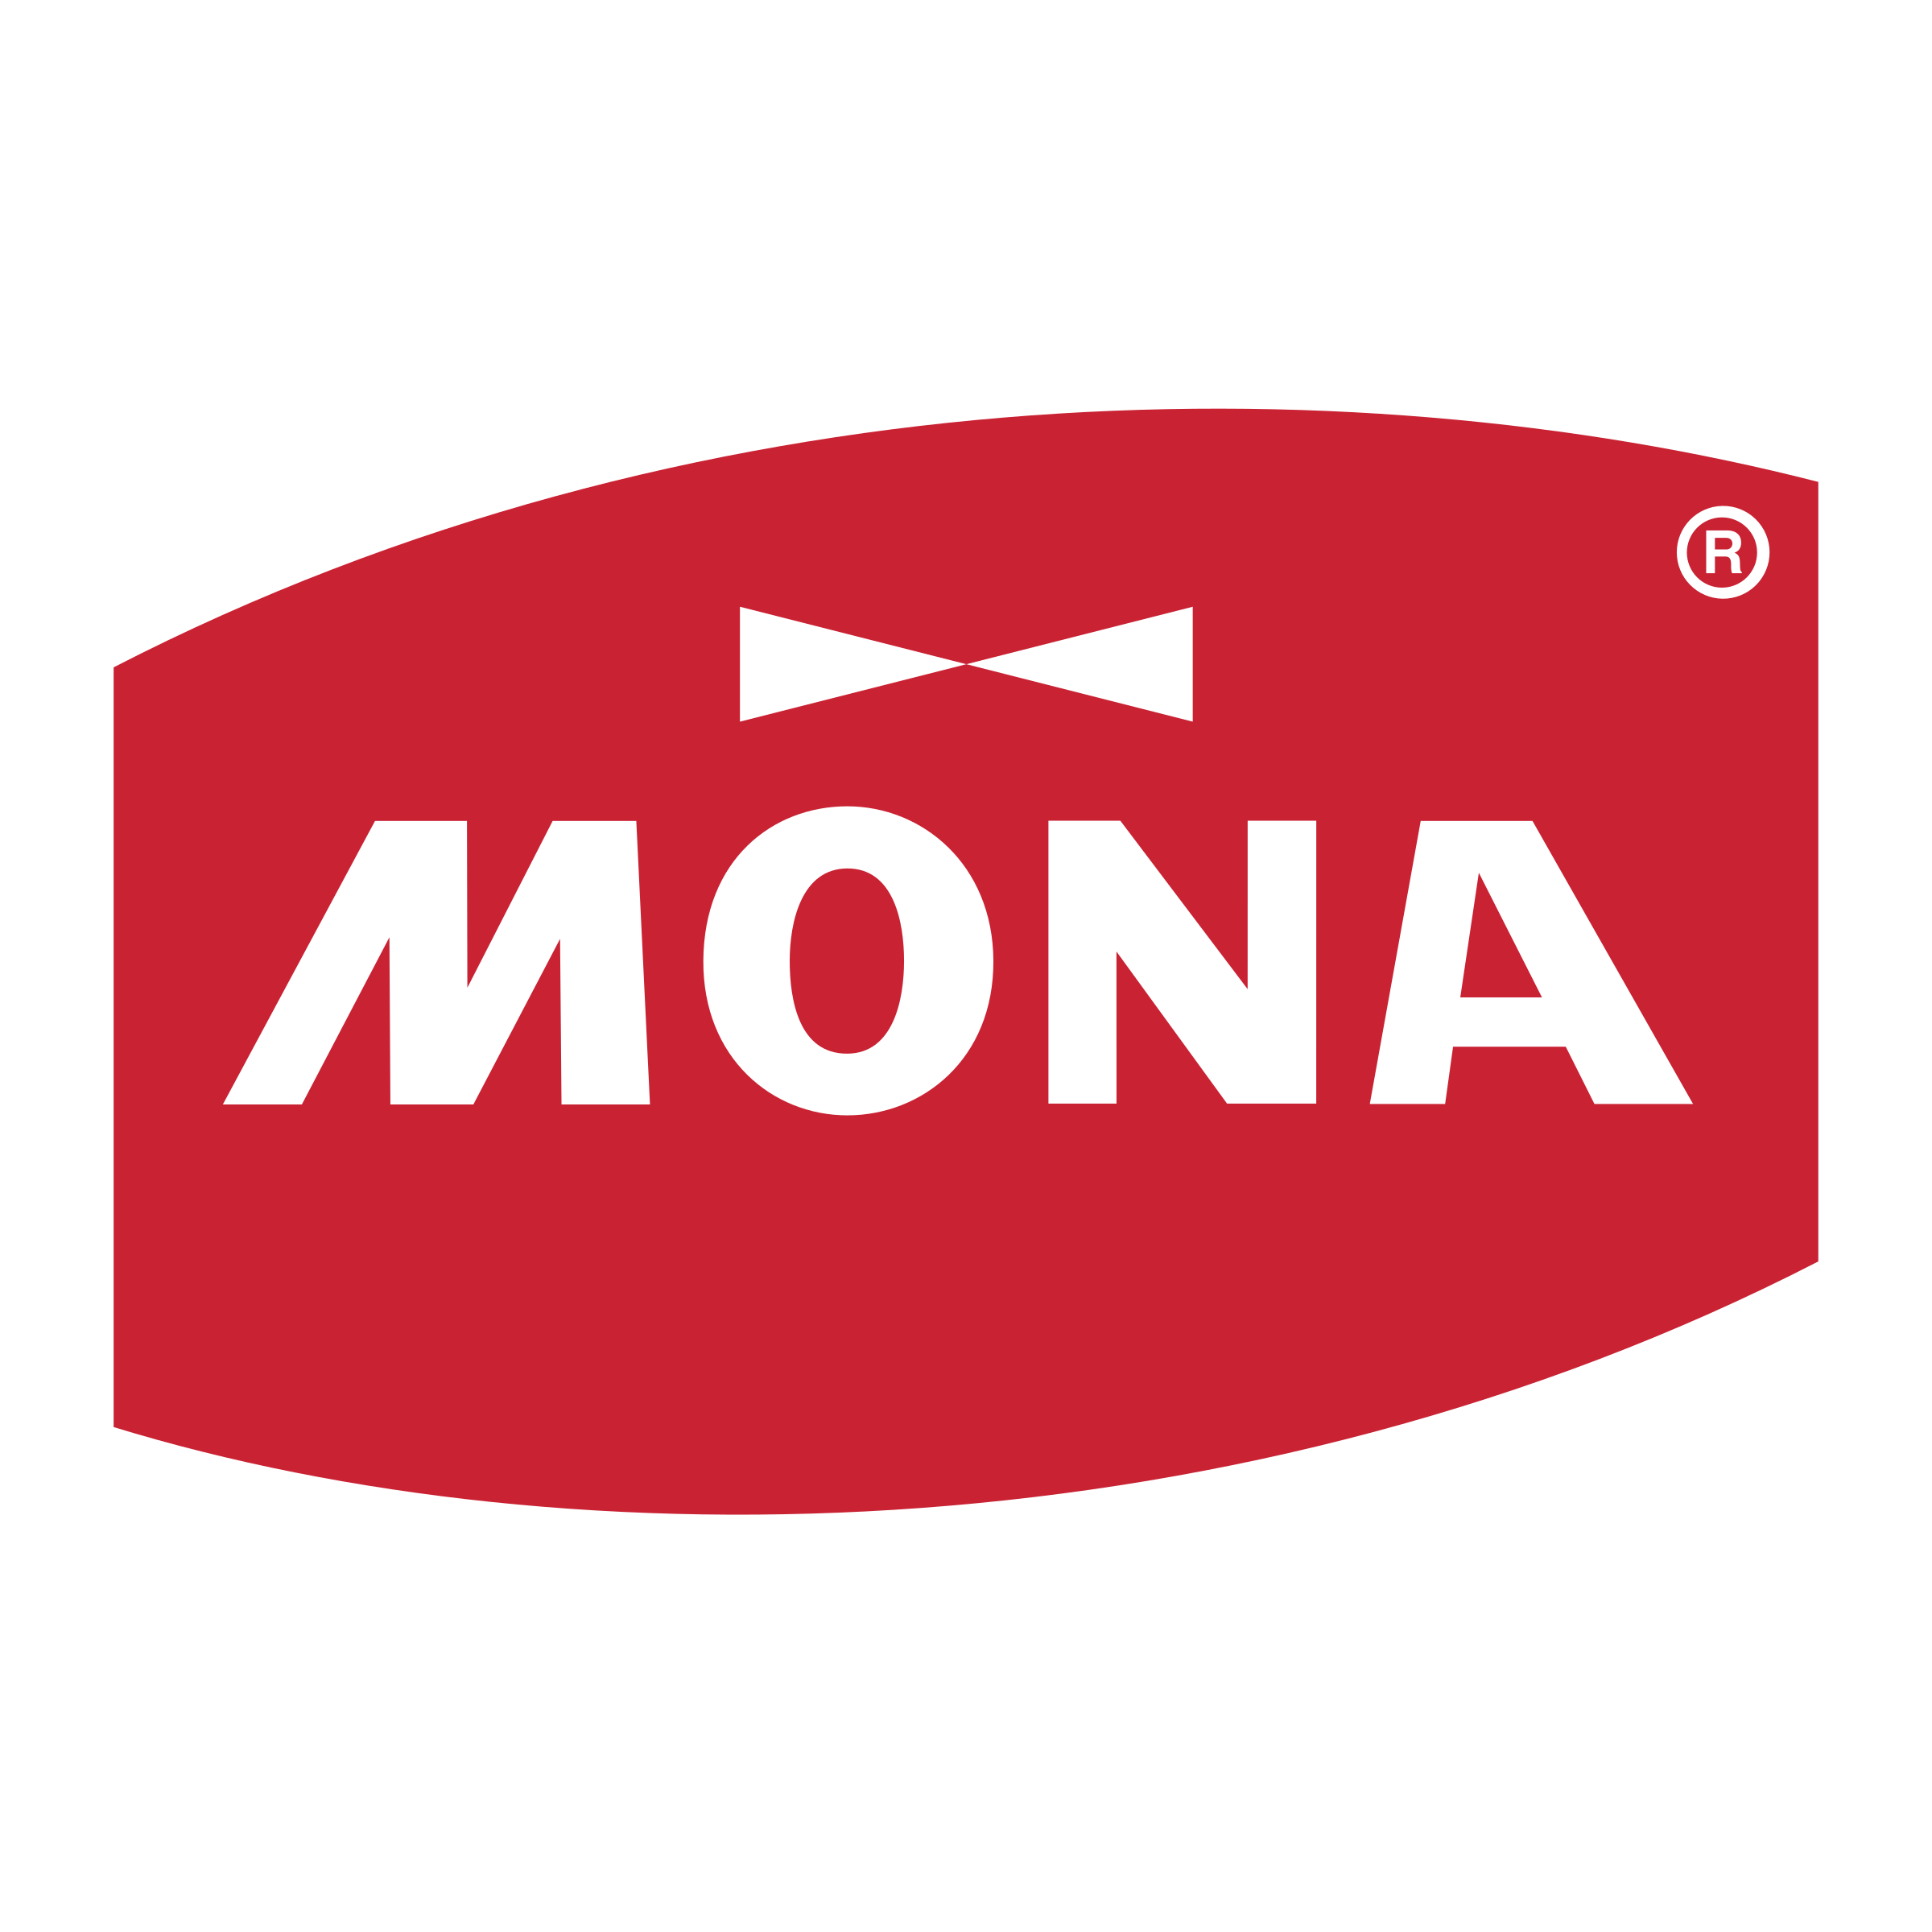 Mona Logo - Mona Logo PNG Transparent & SVG Vector - Freebie Supply